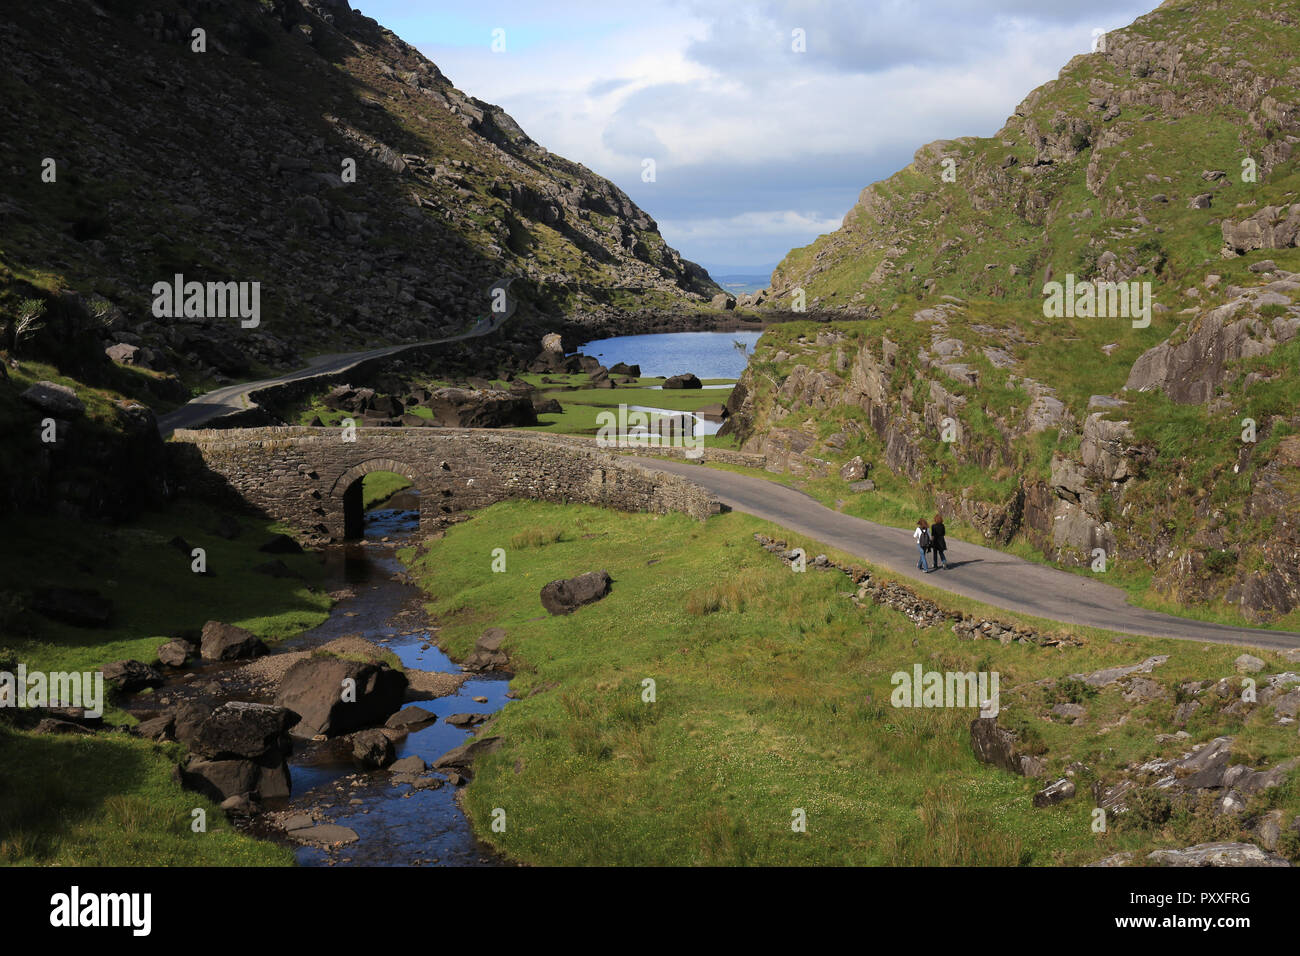 Langer, enger Gebirgspass mit Gletscherseen, Lücke von dunloe, killarney, Grafschaft kerry irland Stockfoto